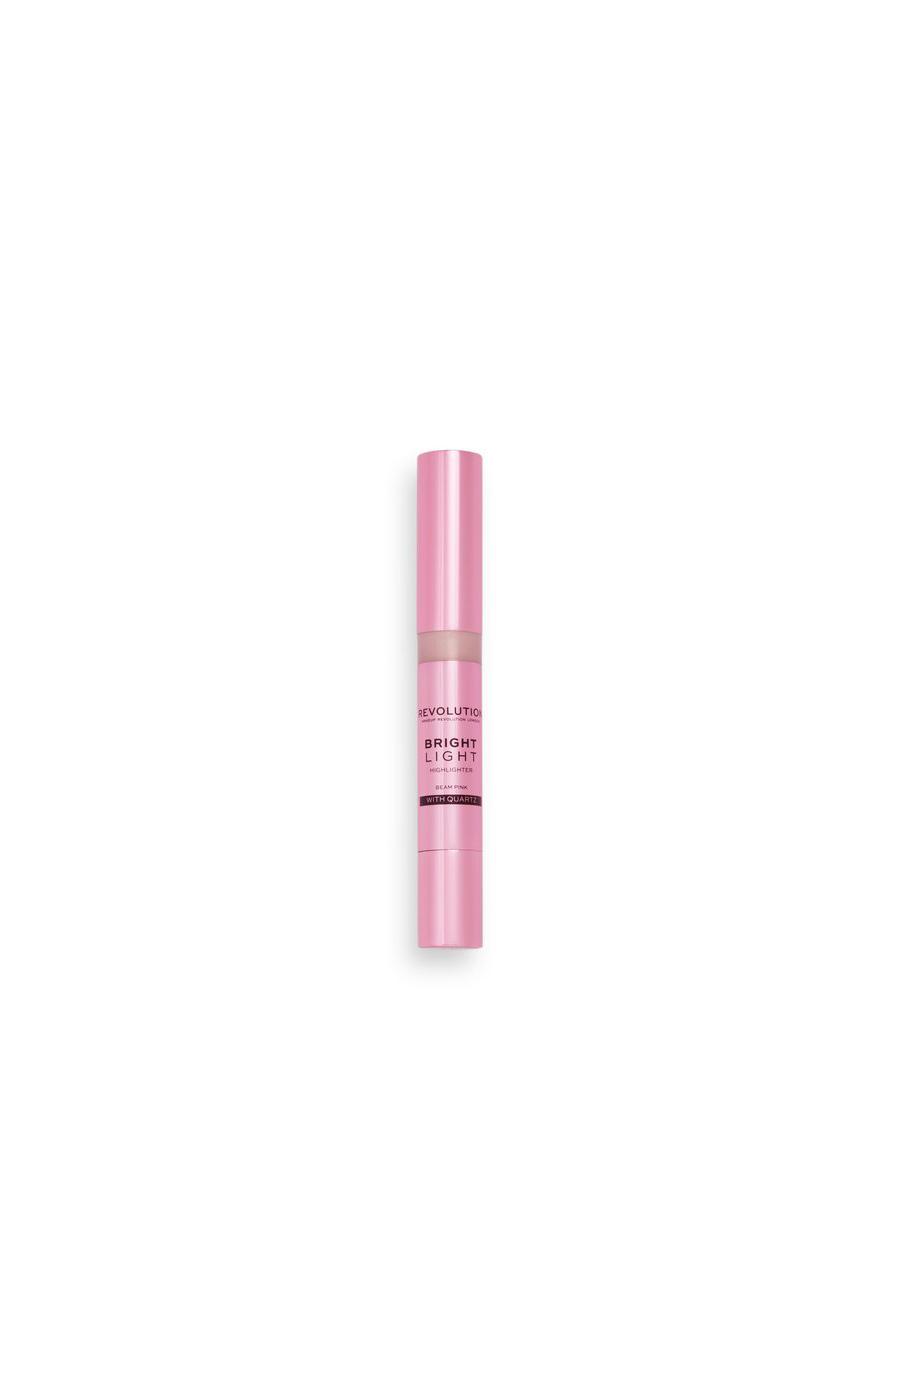 Makeup Revolution Bright Light Highlighter Beam Pink; image 1 of 3